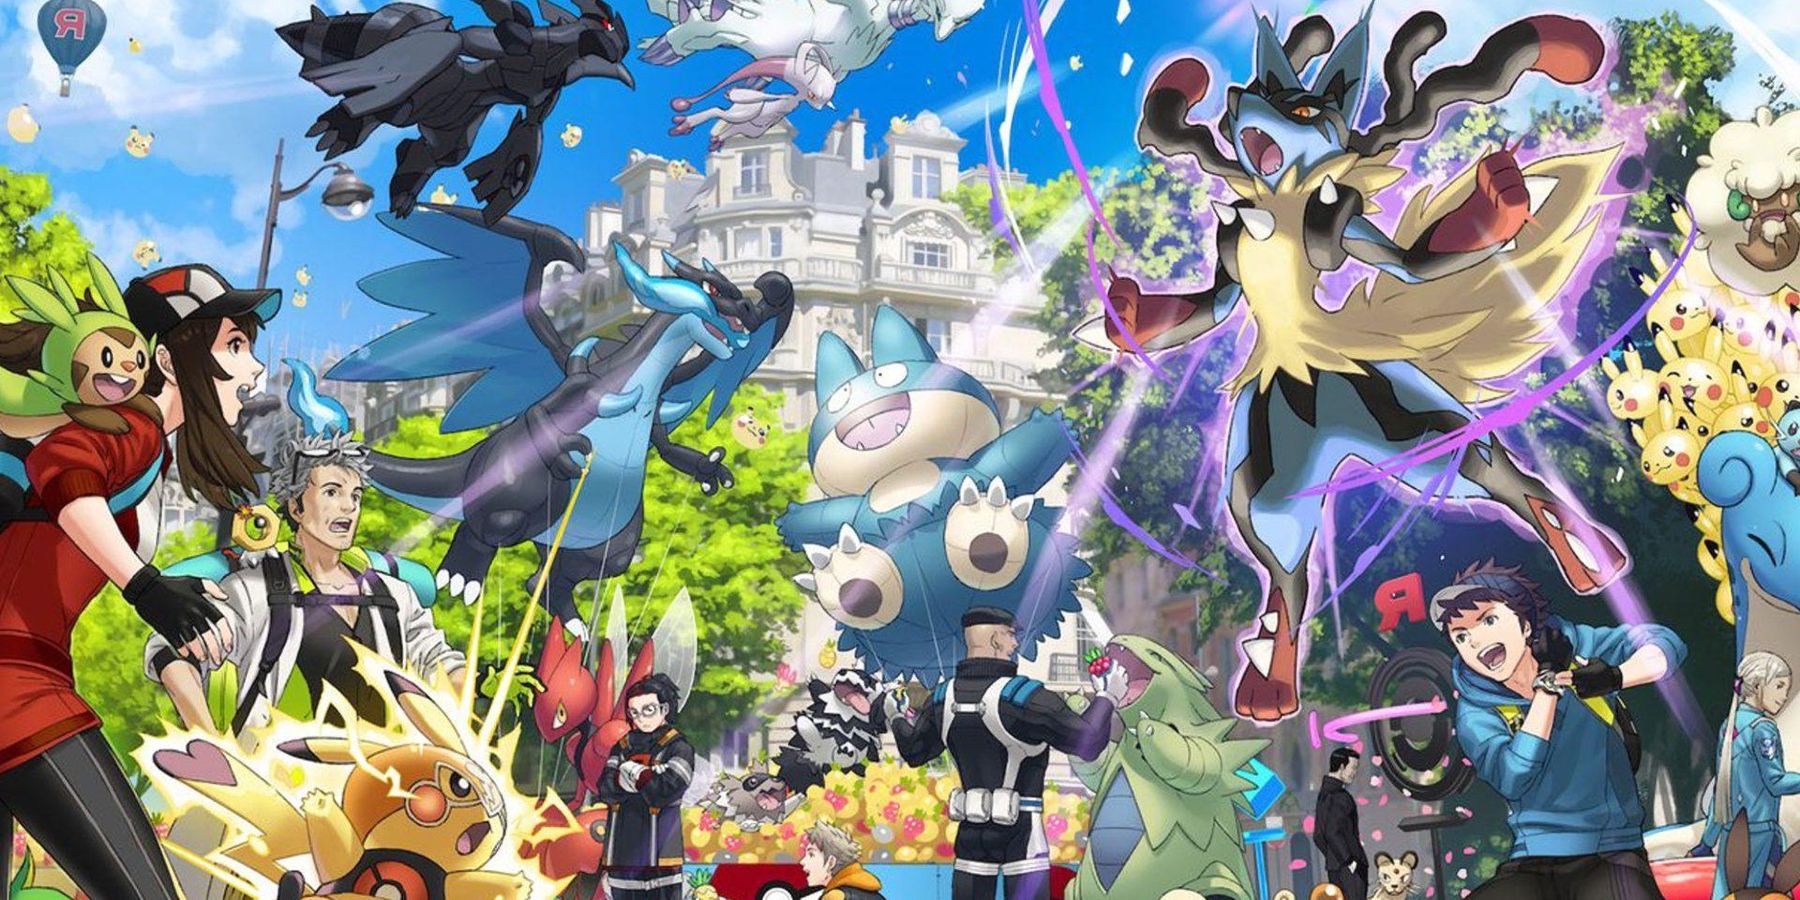 Sprigatito Makes Pokémon Anime Debut In Team Rocket Special